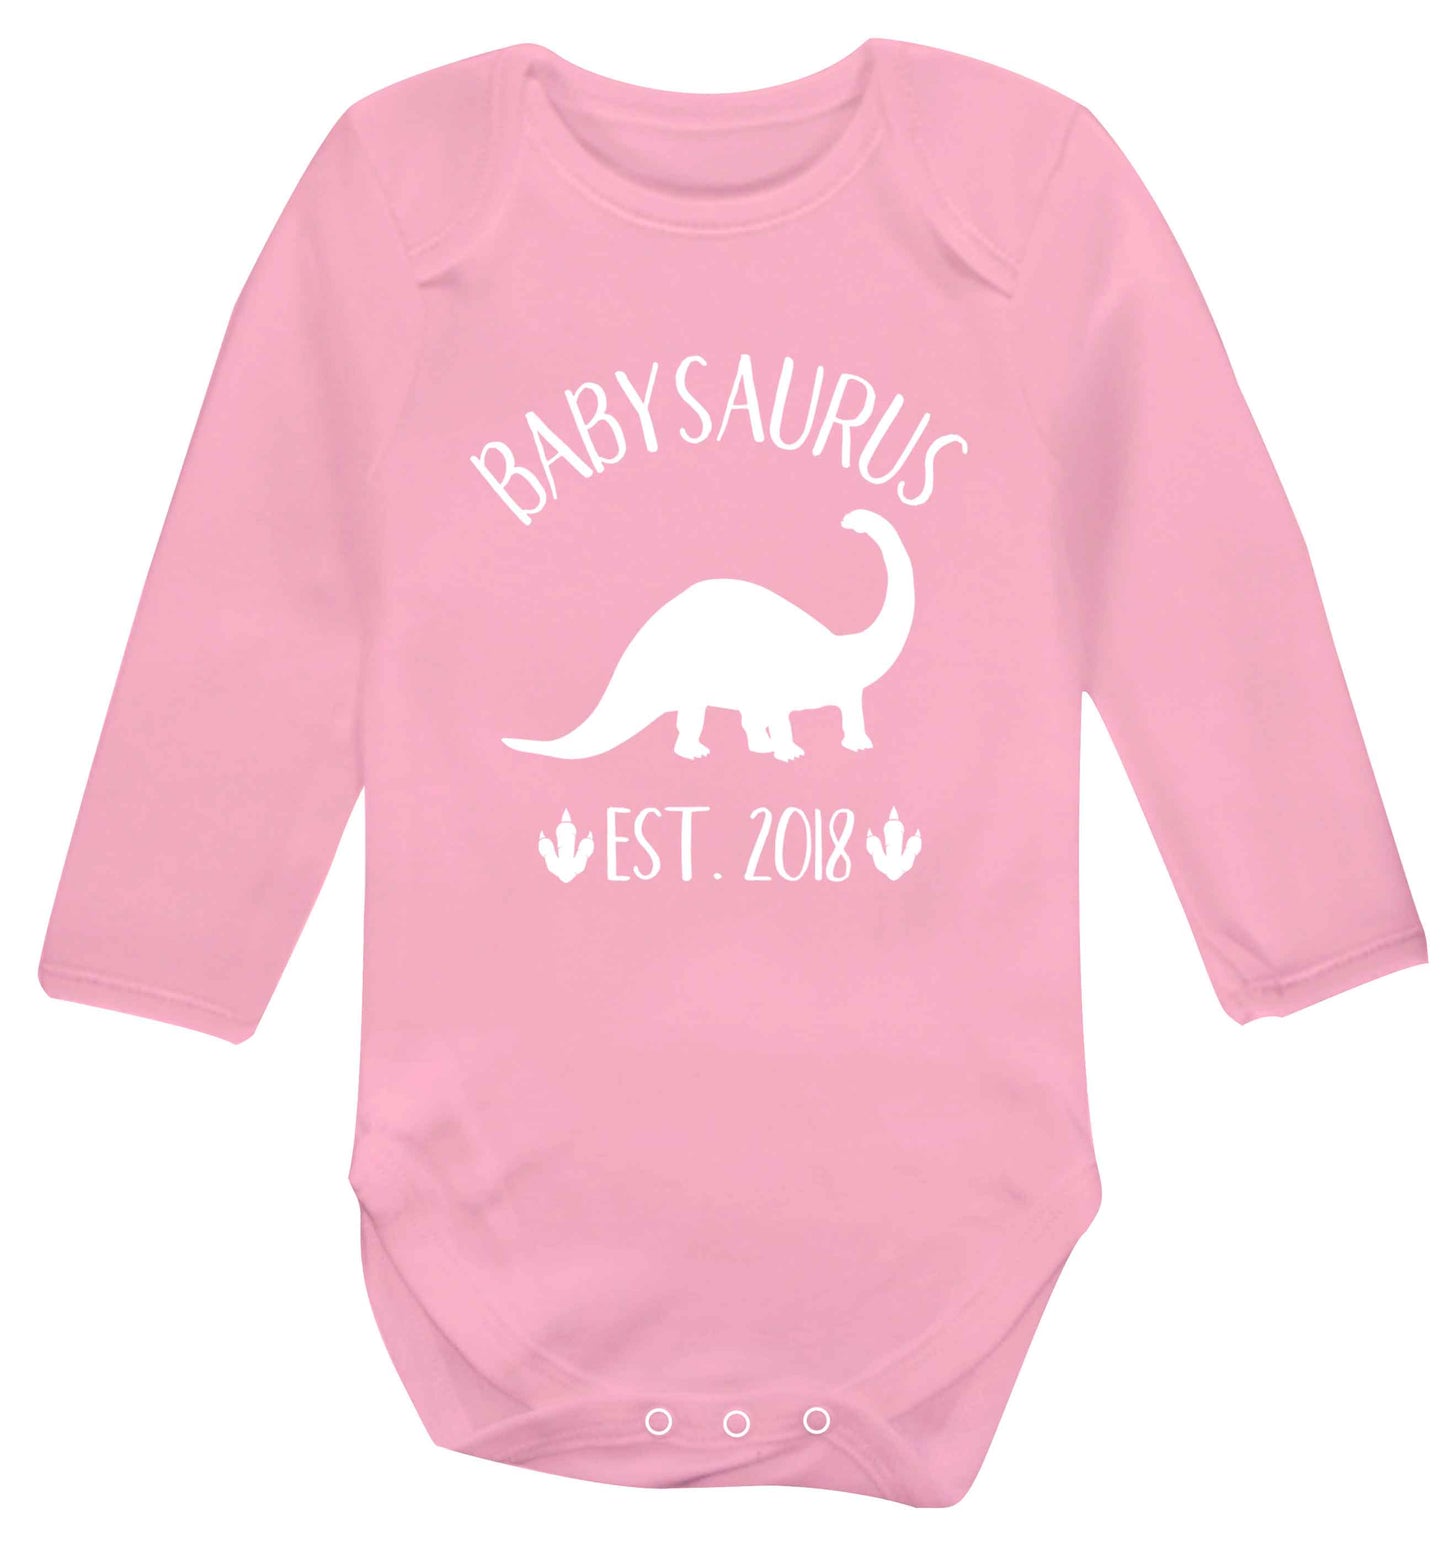 Personalised babysaurus since (custom date) Baby Vest long sleeved pale pink 6-12 months